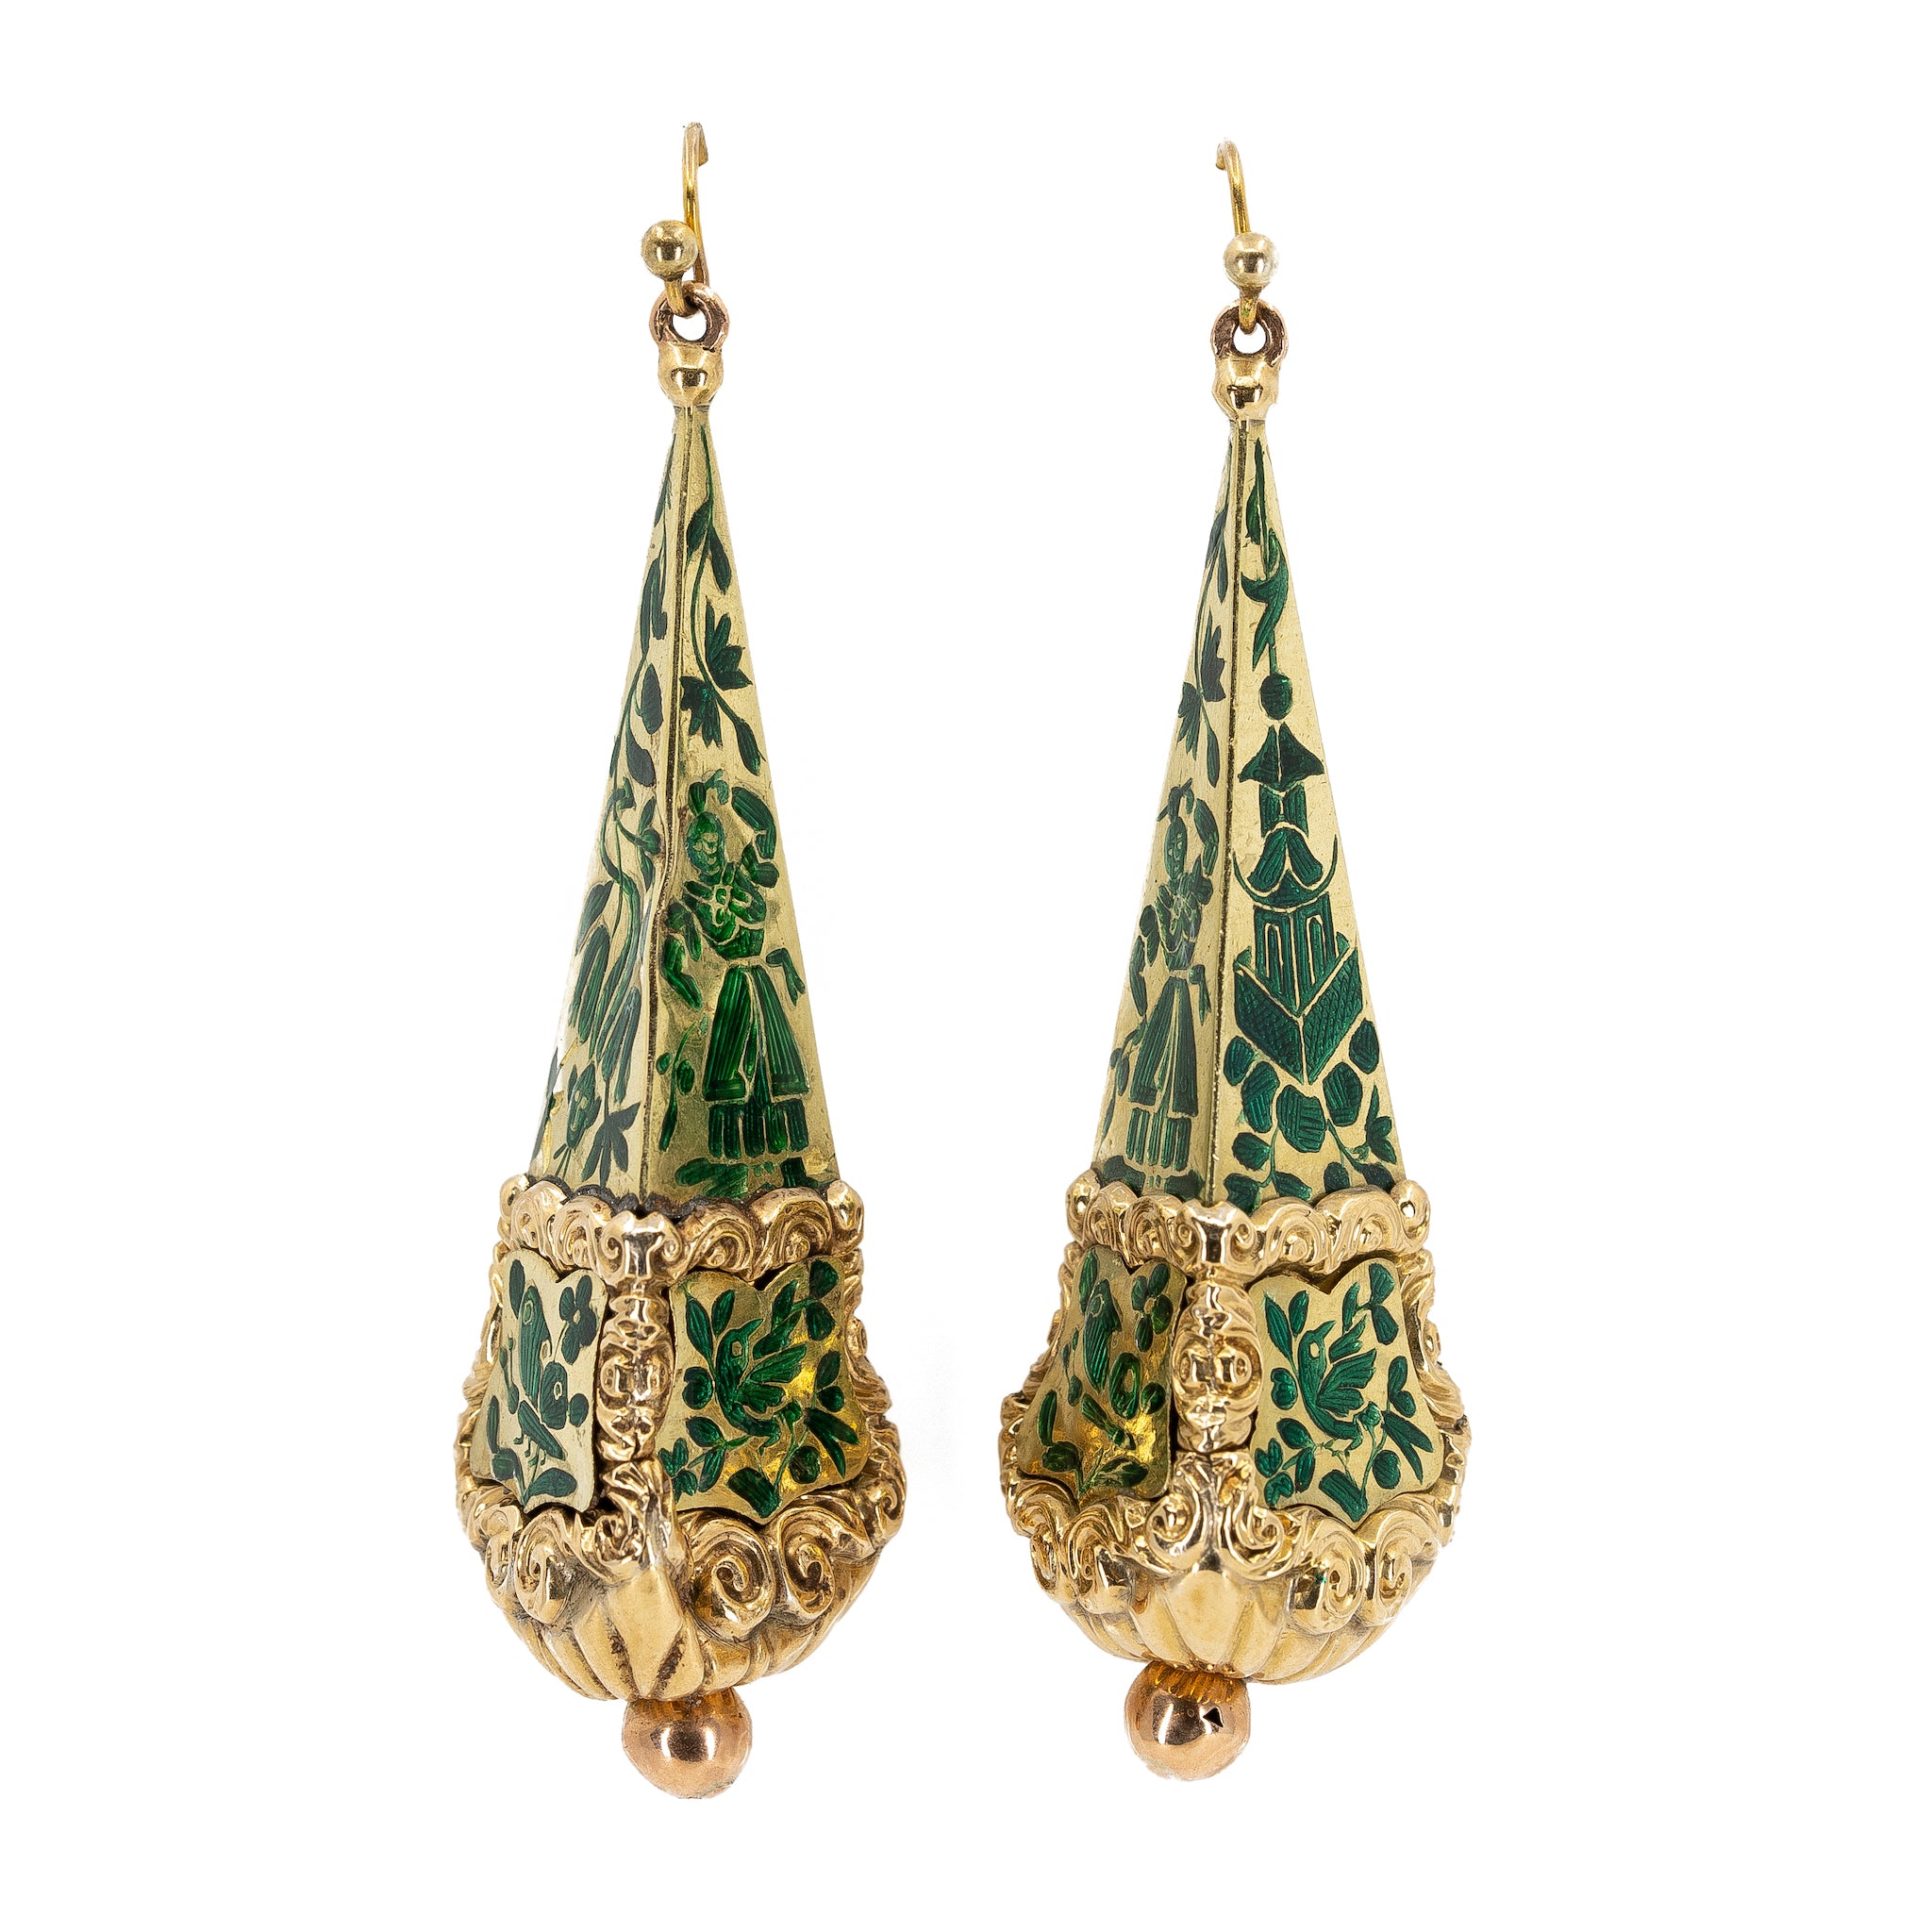 Victorian Green Enamel and Gold Earrings